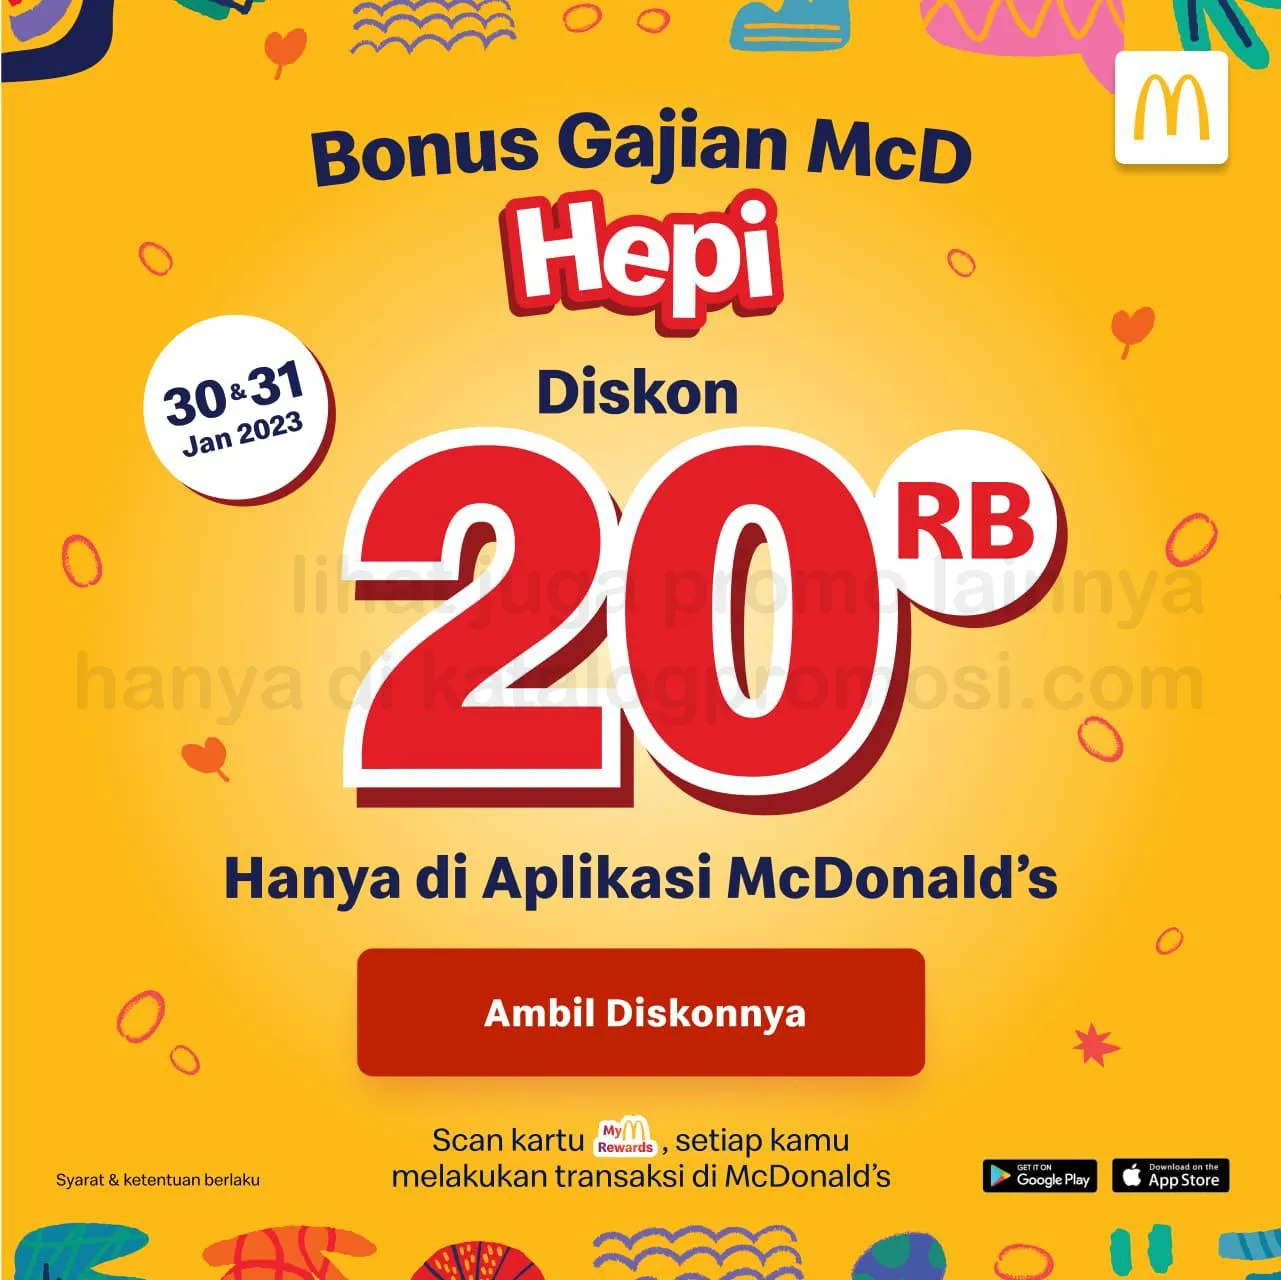 Promo McDonalds BONUS GAJIAN - DISKON 20% atau POTONGAN Rp. 20.000